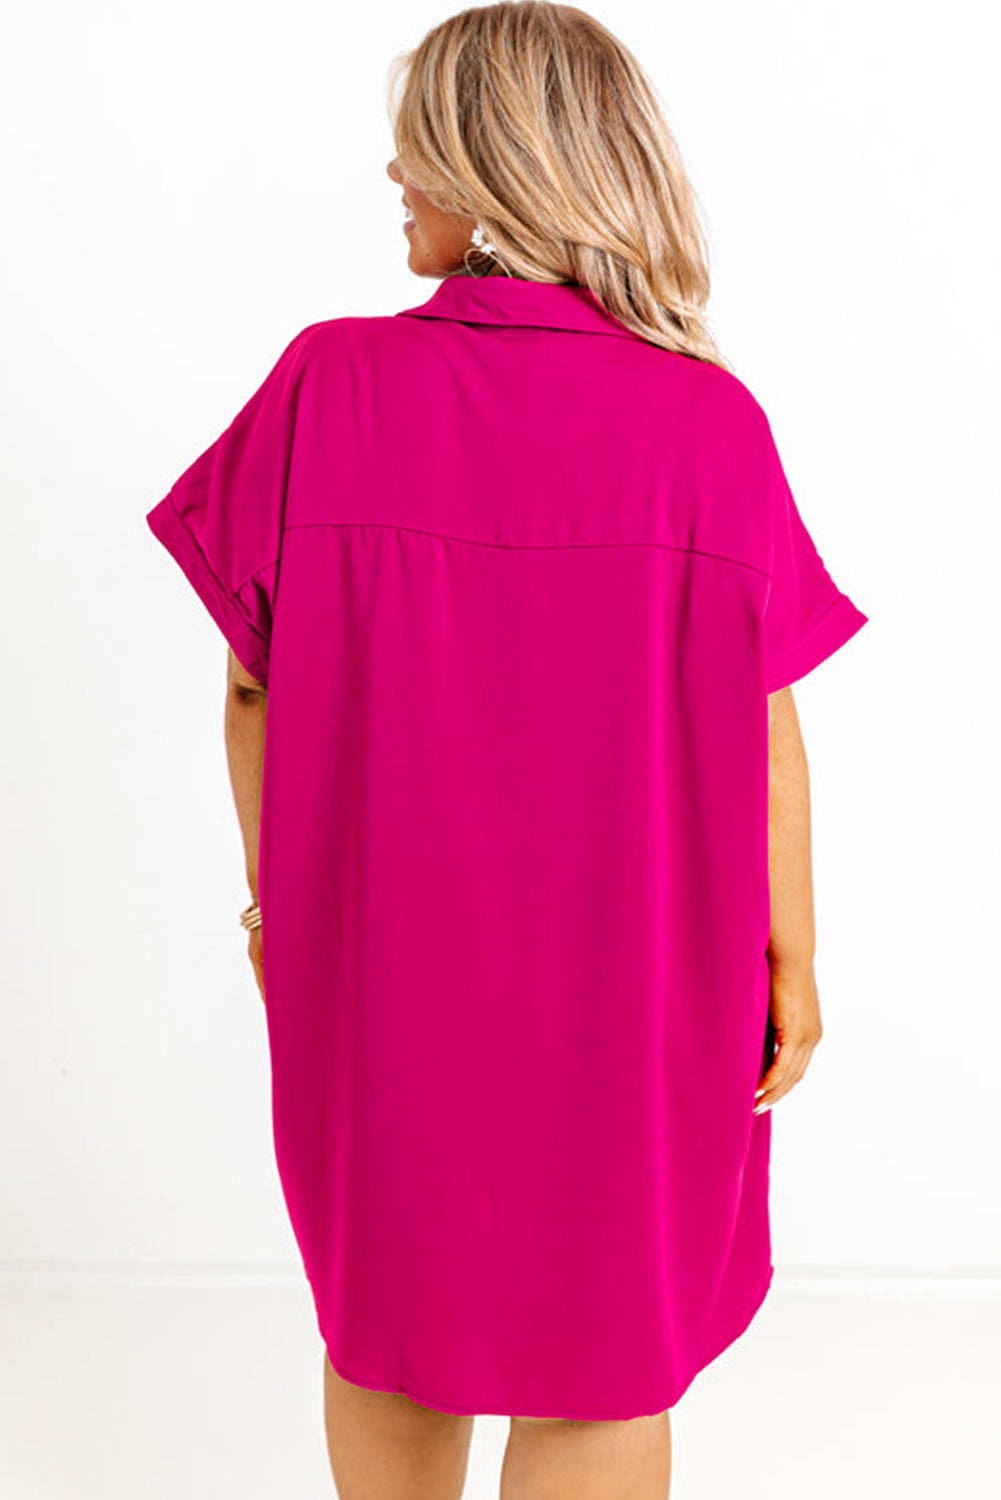 Bright Pink Collared V Neck Short Sleeve Shift Plus Size Dress